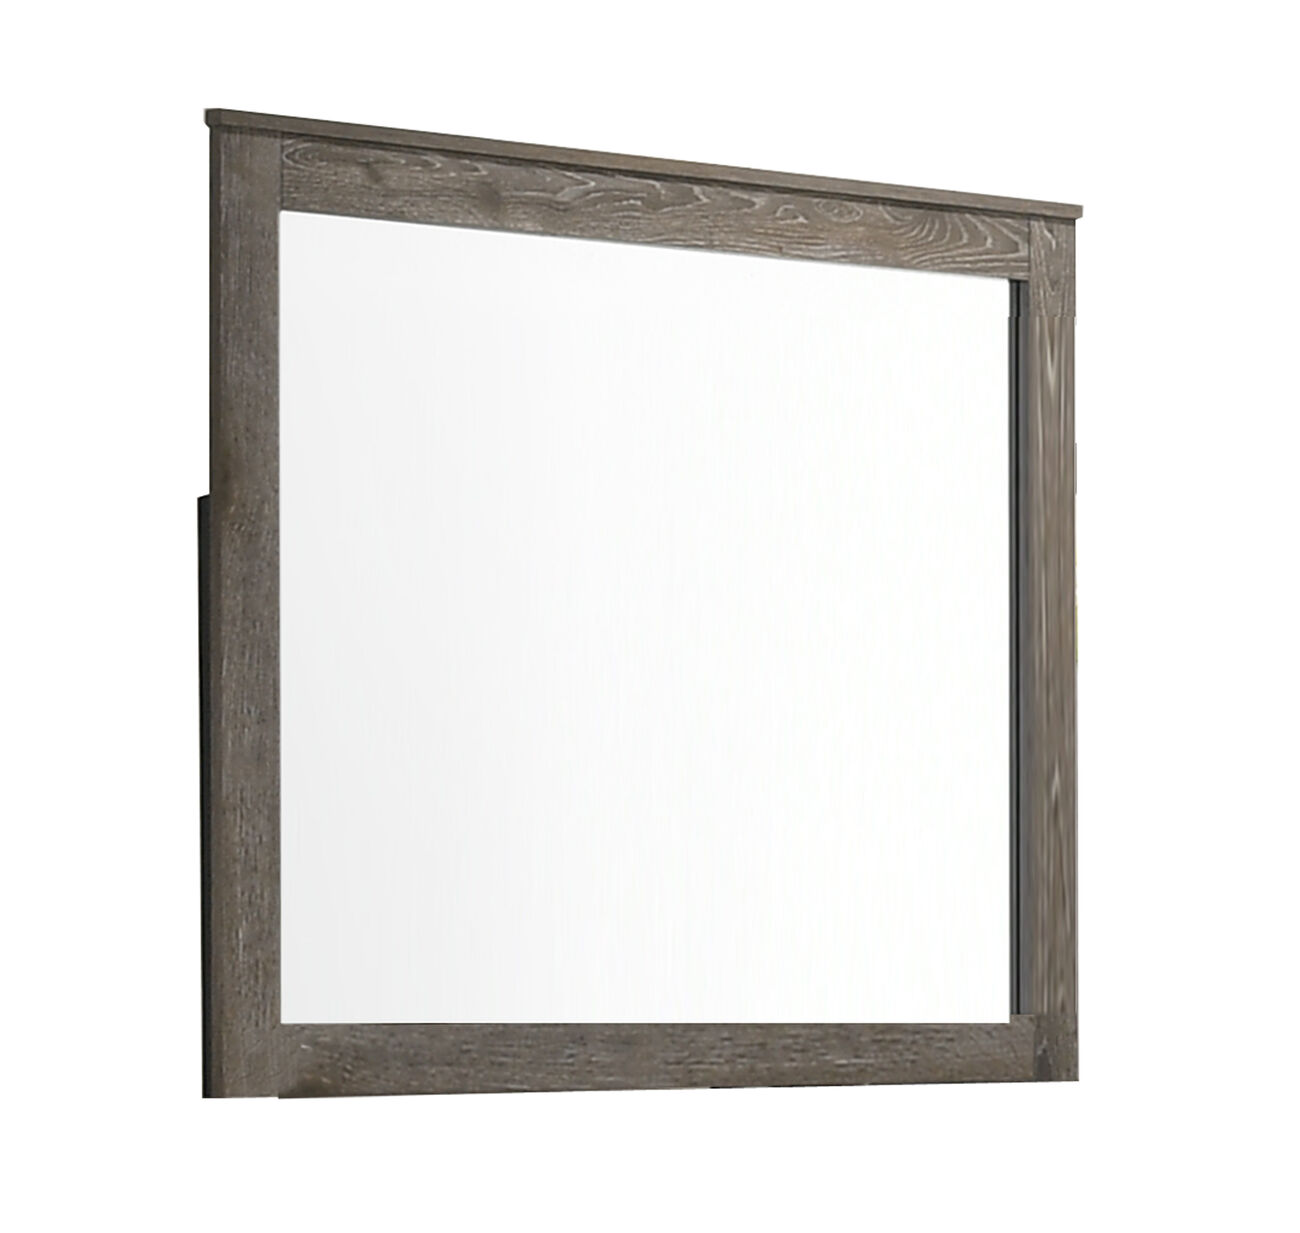 Rectangular Grained Wooden Frame Dresser Mirror, Brown and Silver